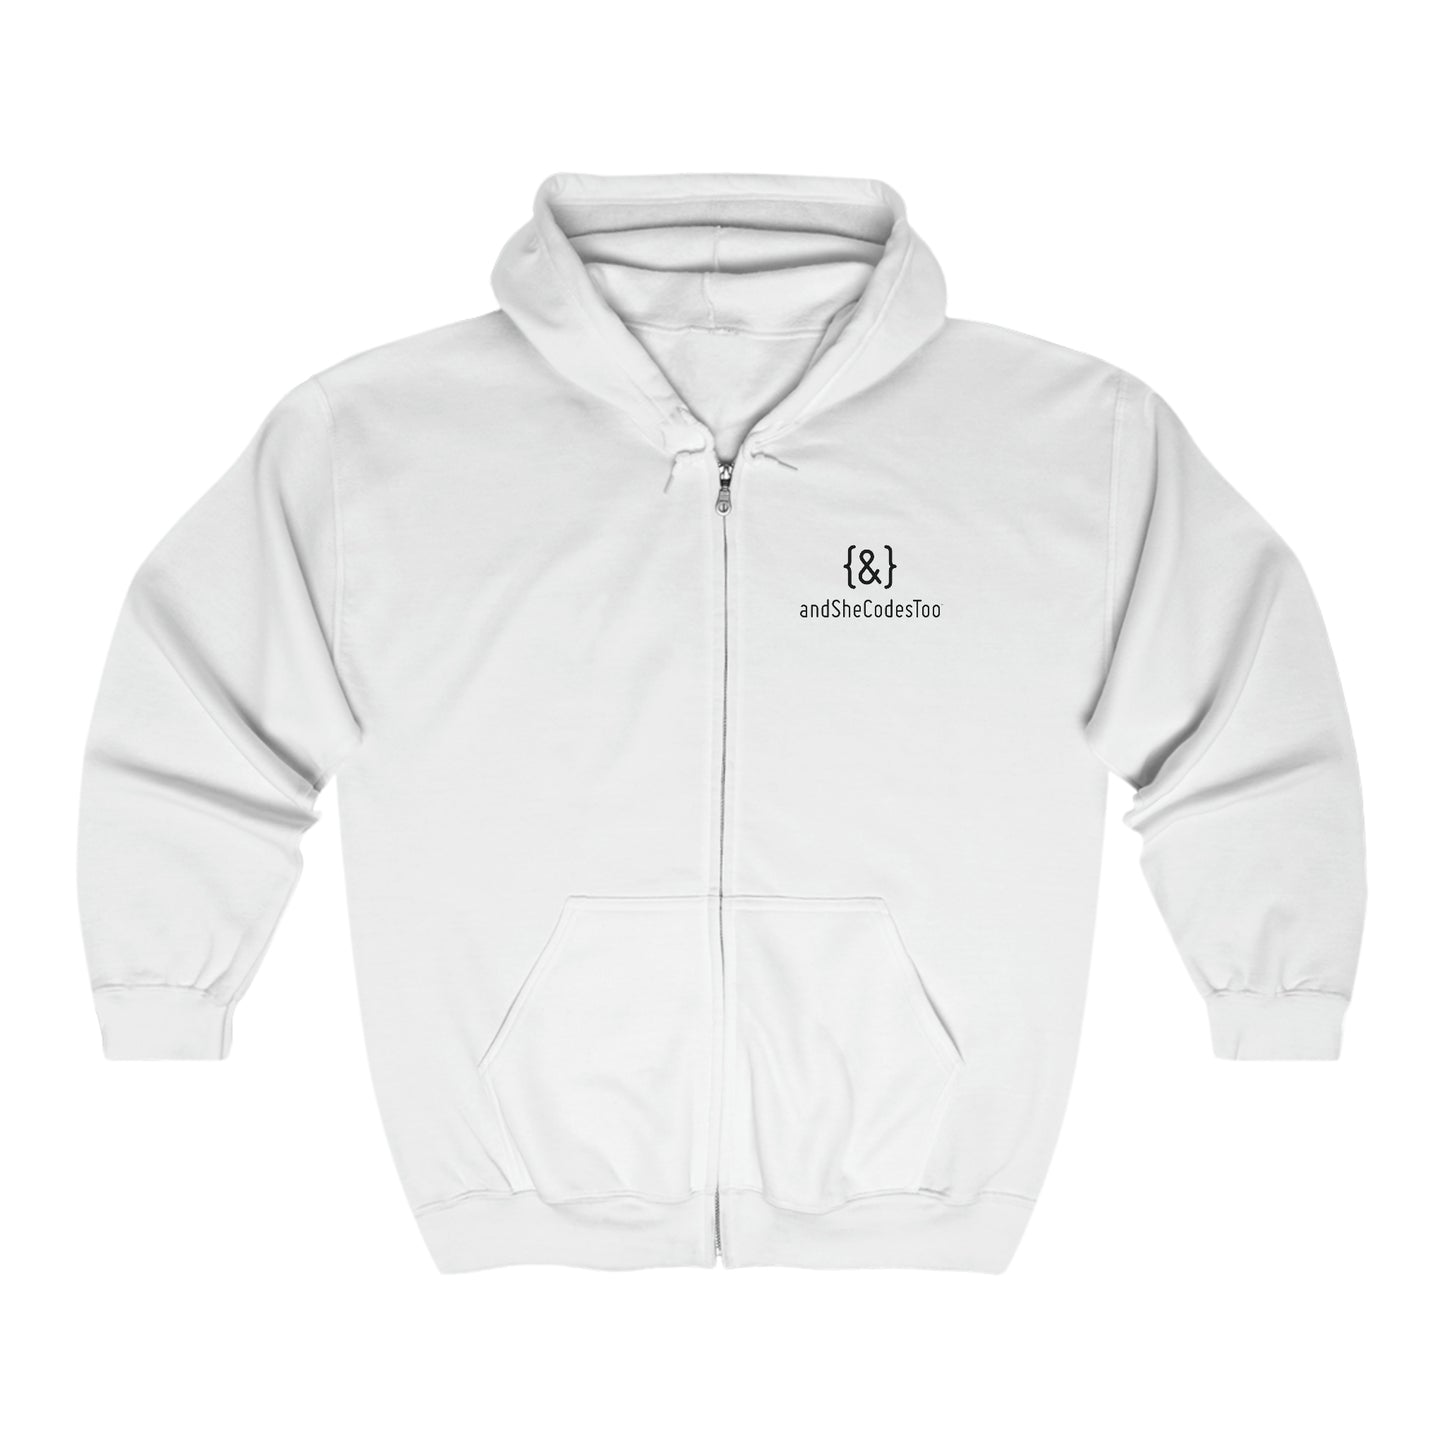 XL  - Zip Hoodie White - Black and White Logo - Unicorn on back - QR Code on sleeve